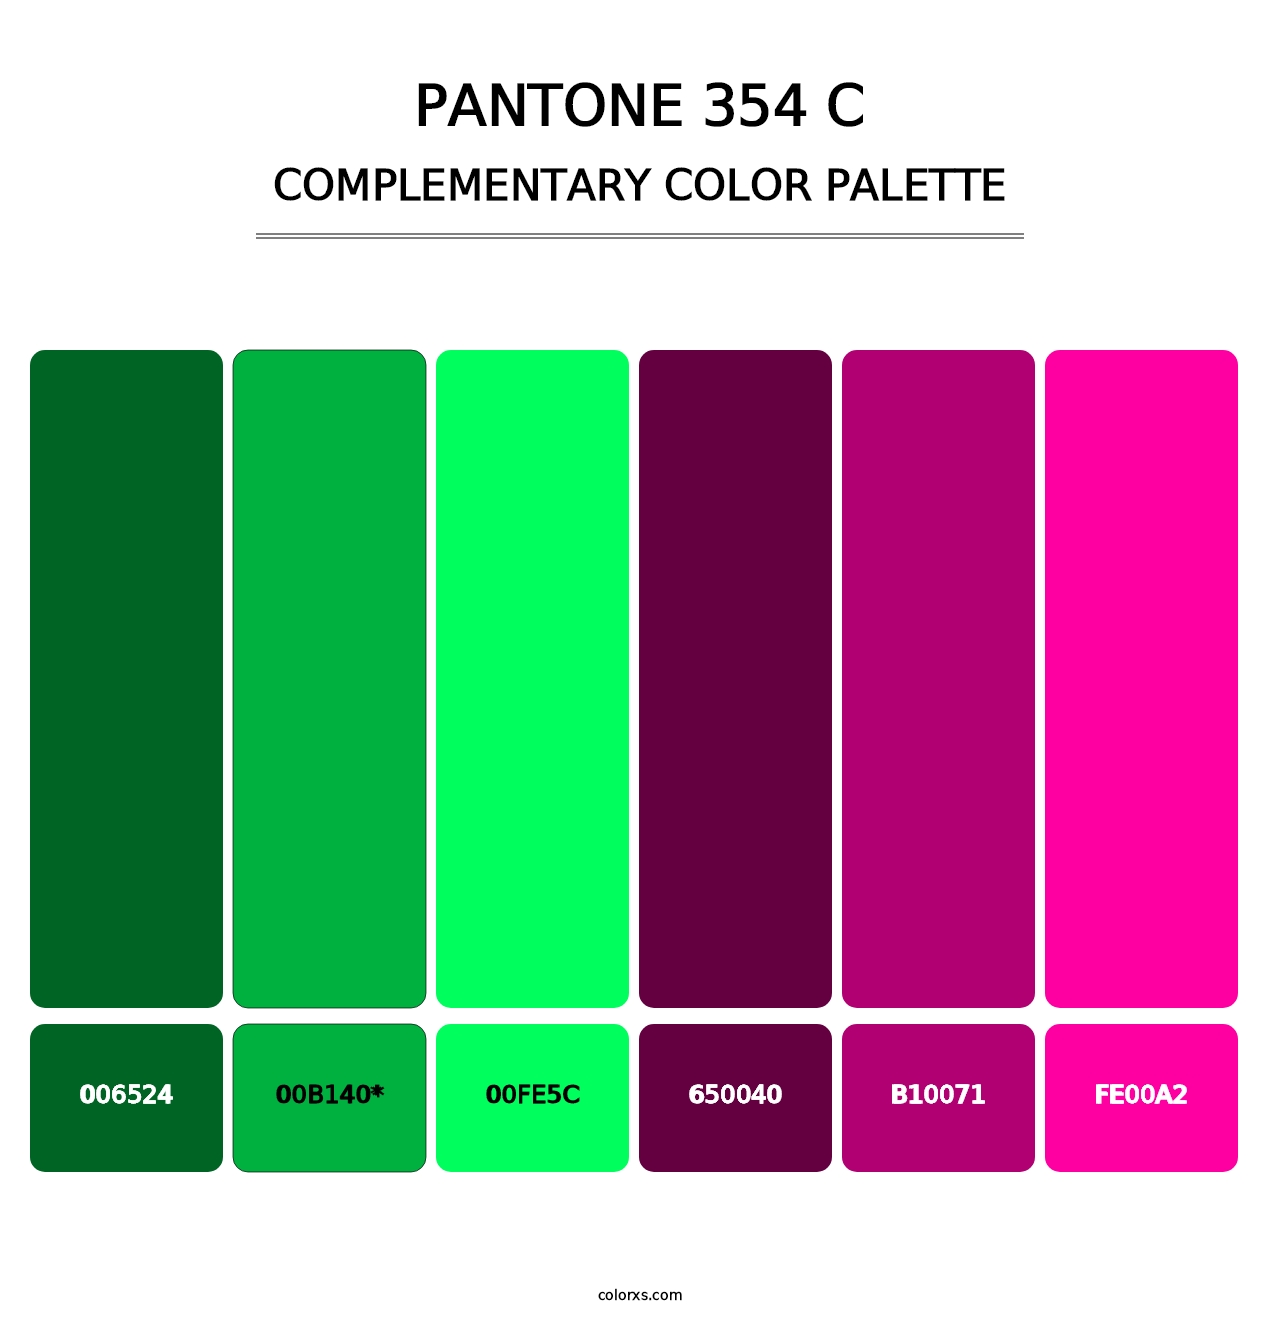 PANTONE 354 C - Complementary Color Palette